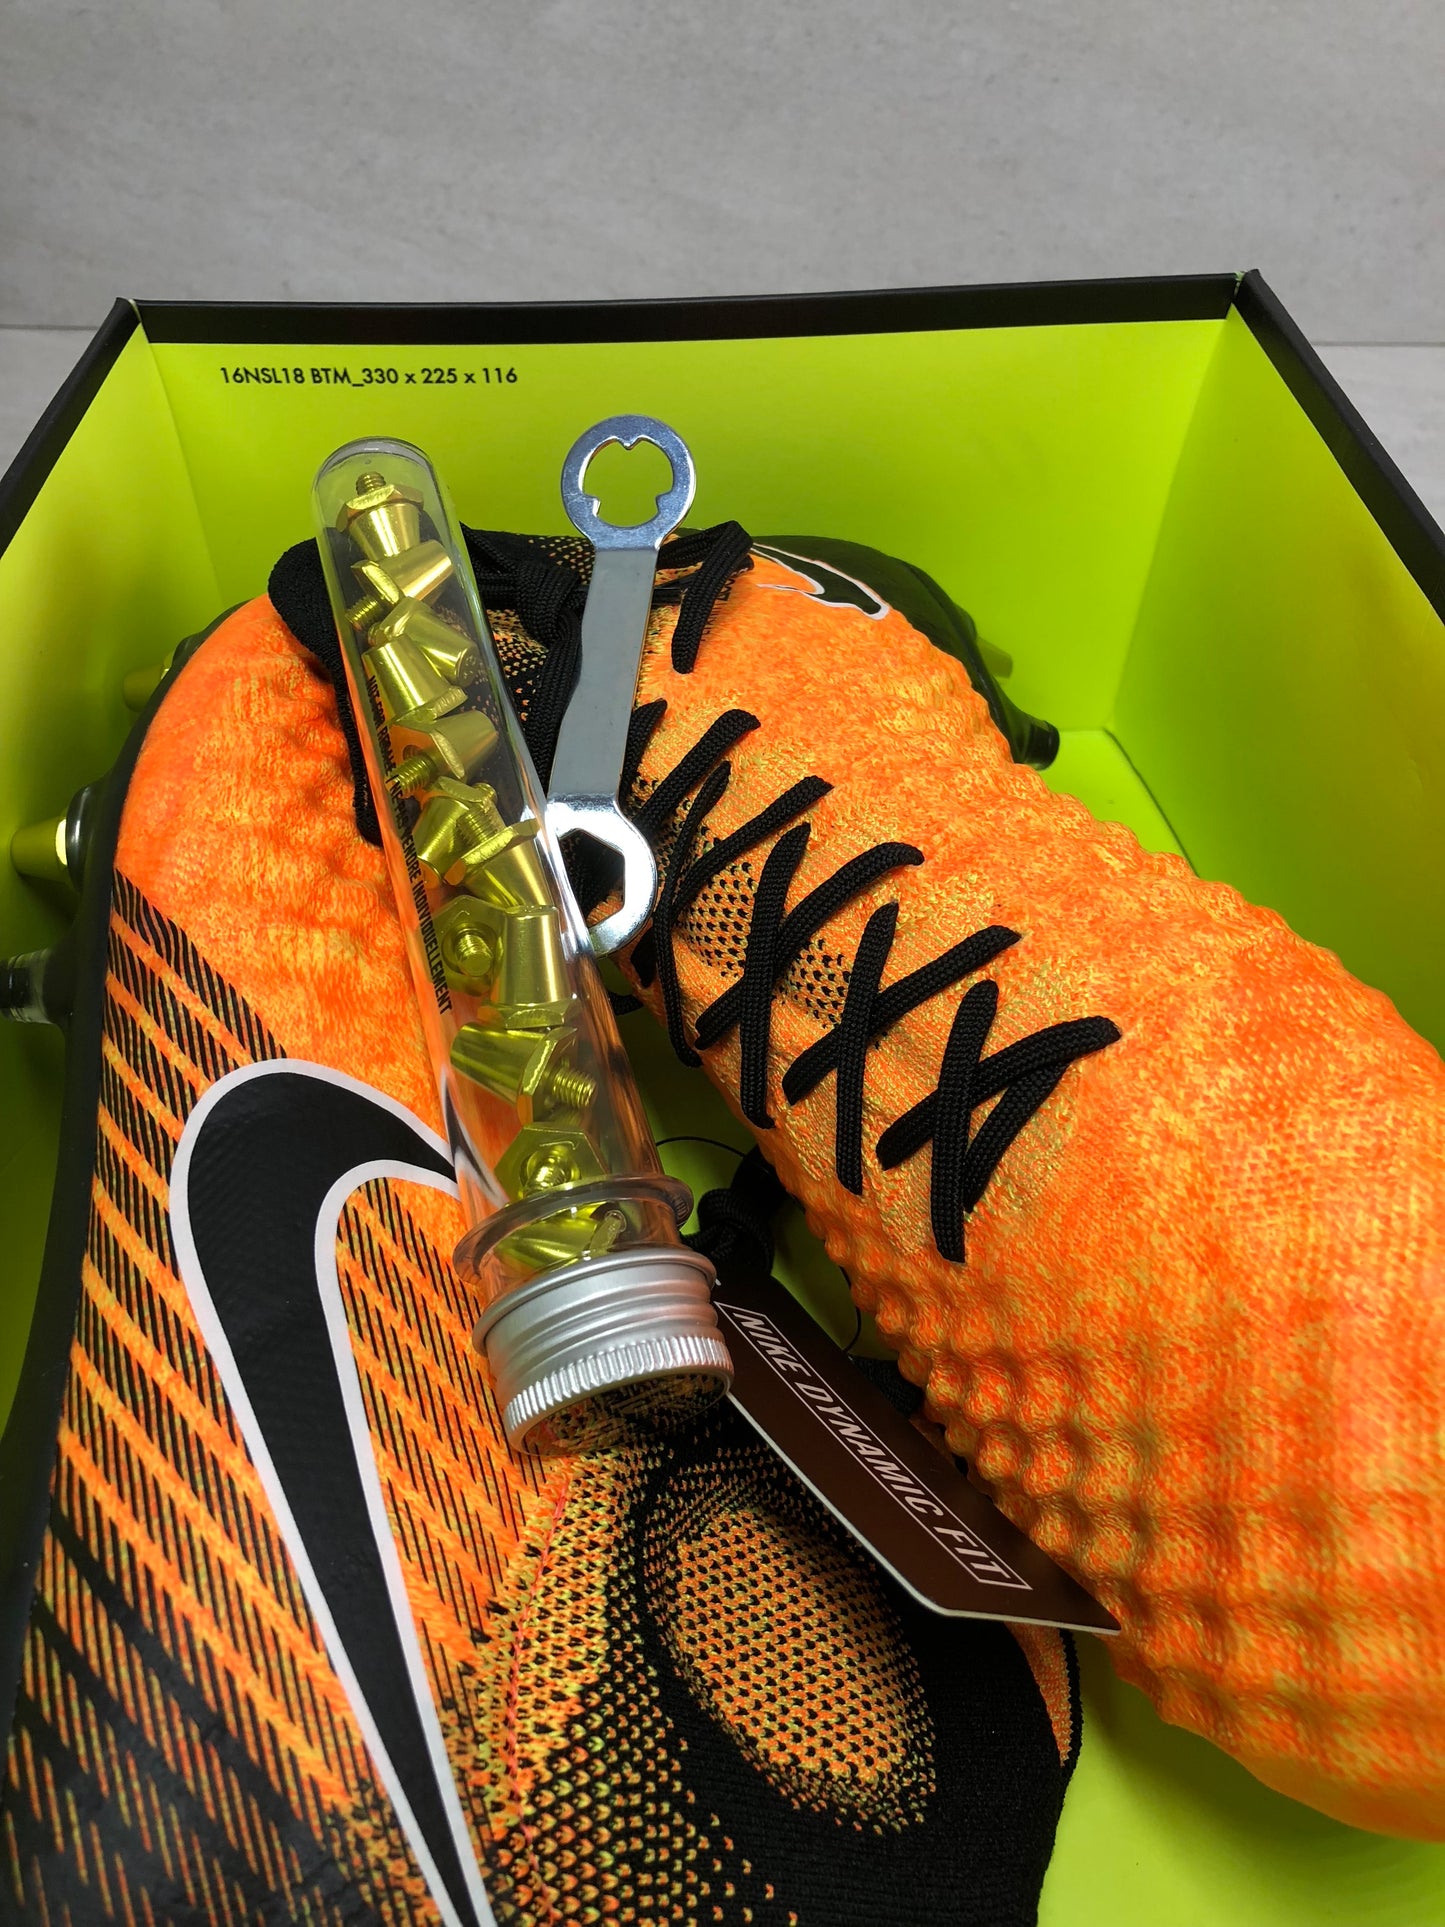 Nike Magista Obra II SG Pro - 869482 802 - Men's Soccer Cleats Size 8/Size 9 Laser Orange Black White